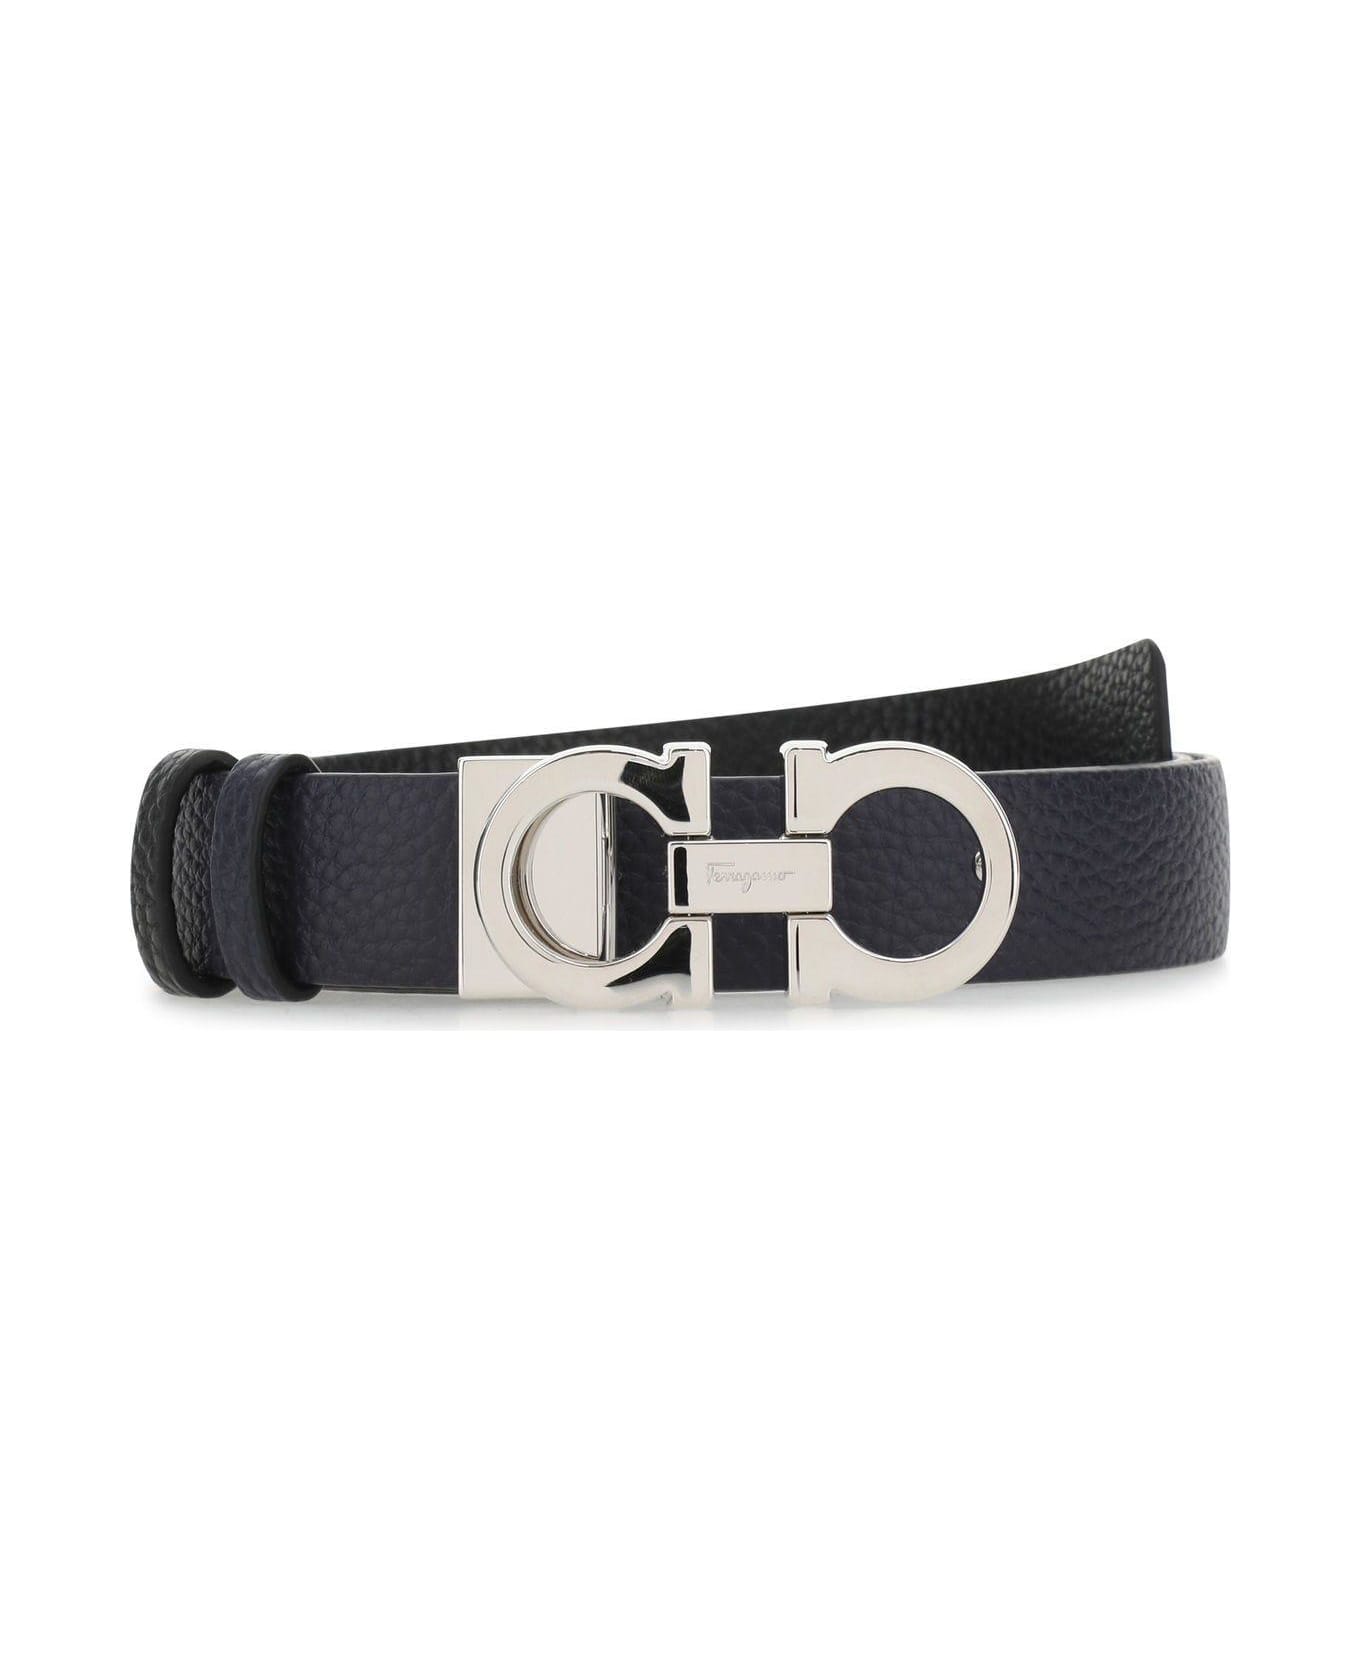 Ferragamo Midnight Blue Leather Reversible Belt - MIRTO/NERO